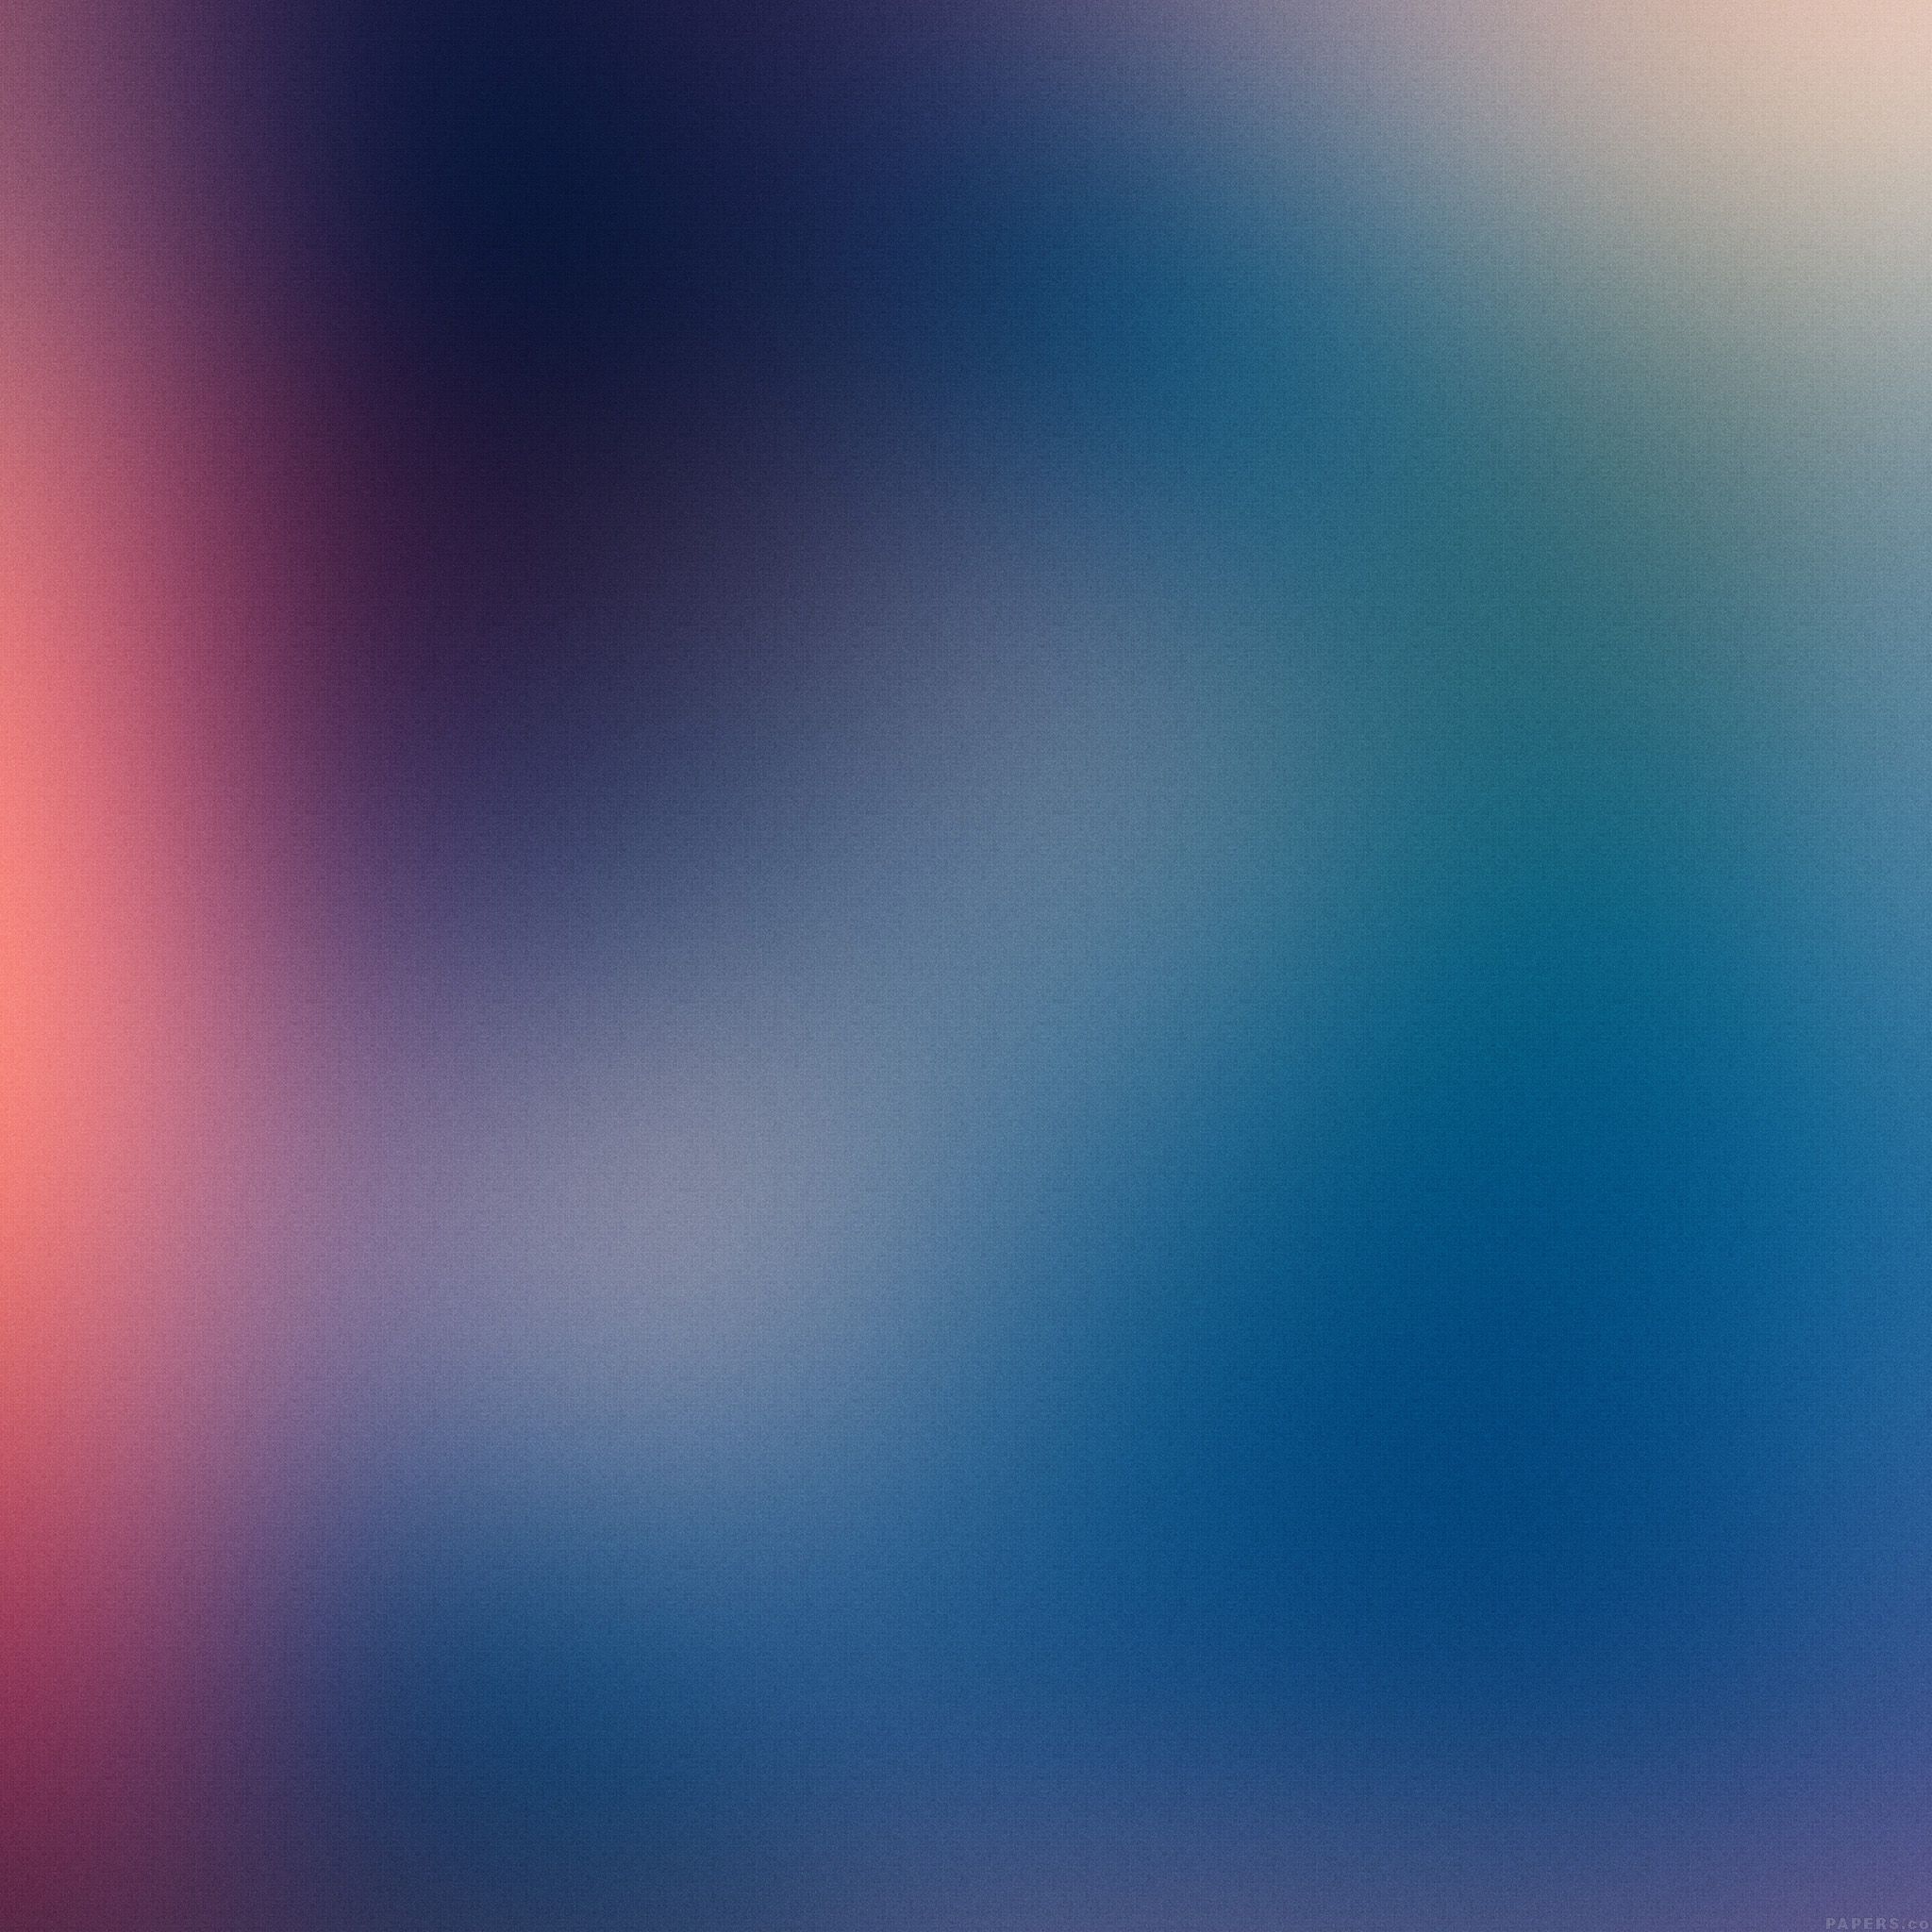 Grid Blur Cotton Candy Pattern Wallpaper